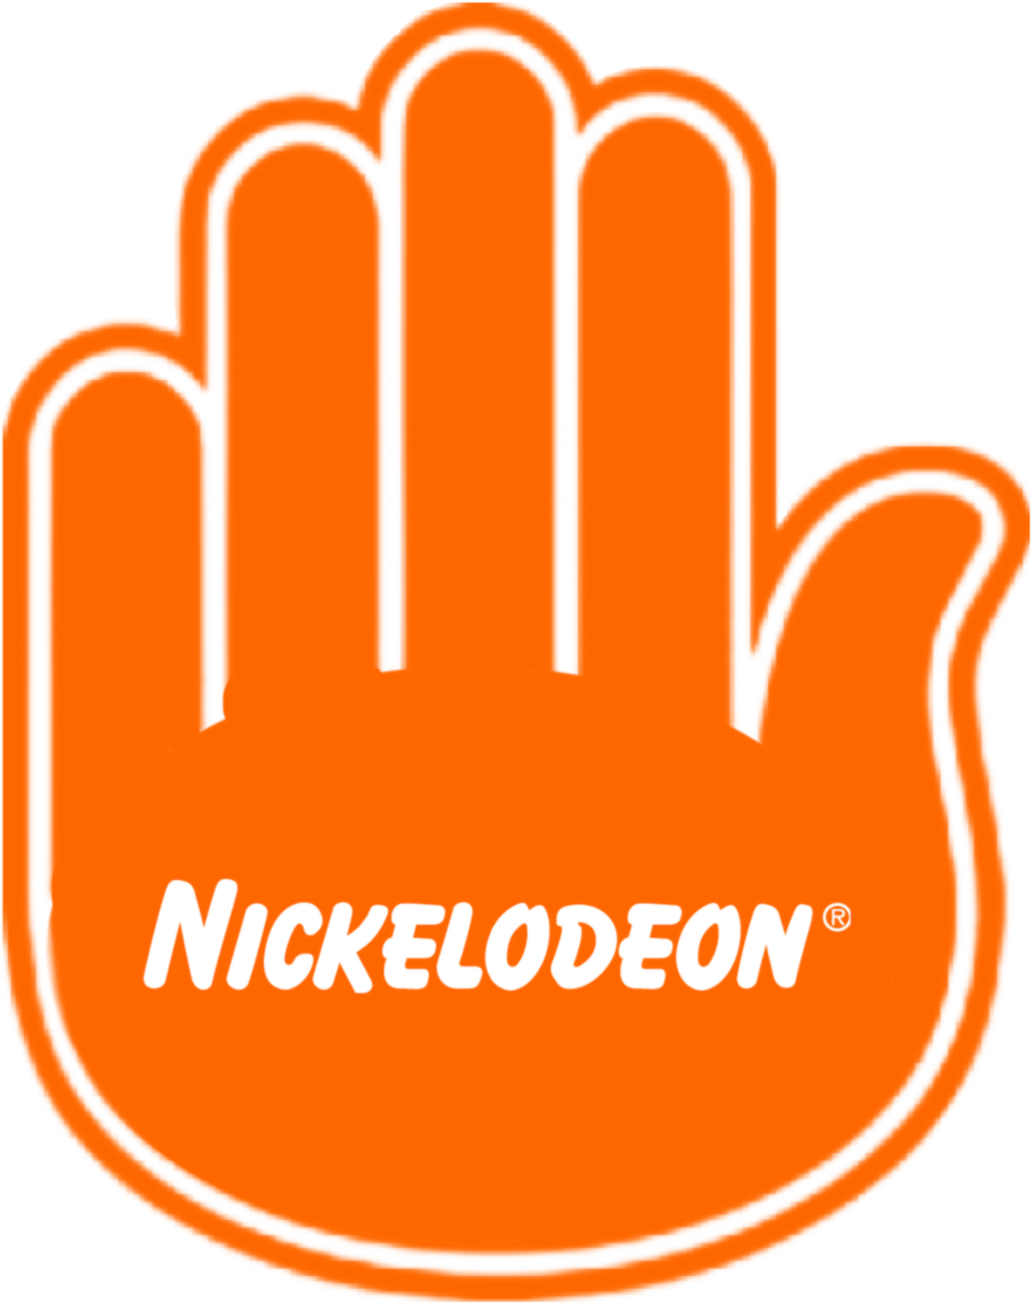 Nickelodeon Shaped Logo - The N Hand by MarkPipi on DeviantArt